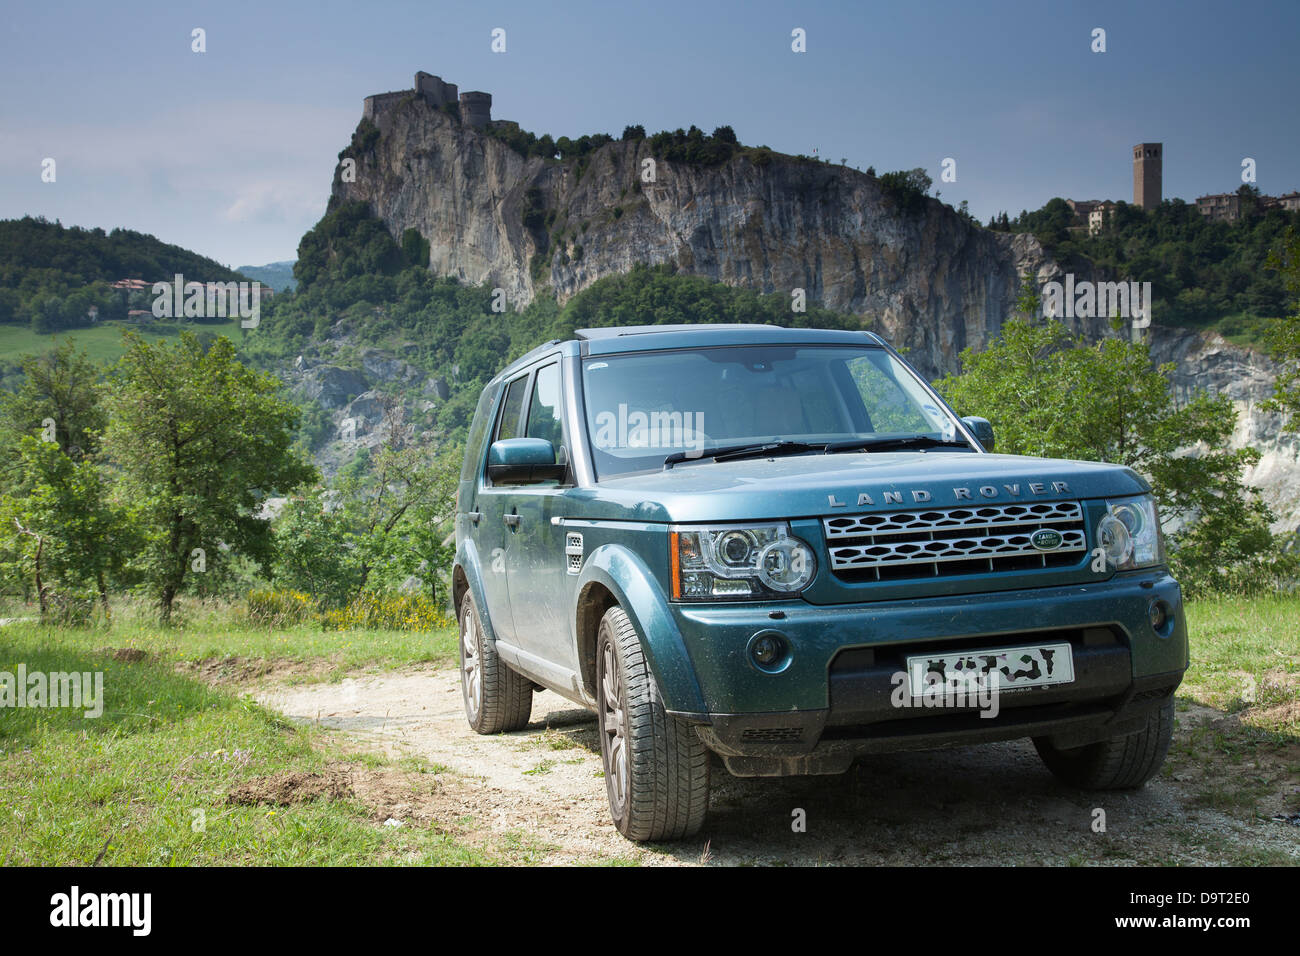 Land Rover, Marche, Italien Stockfoto